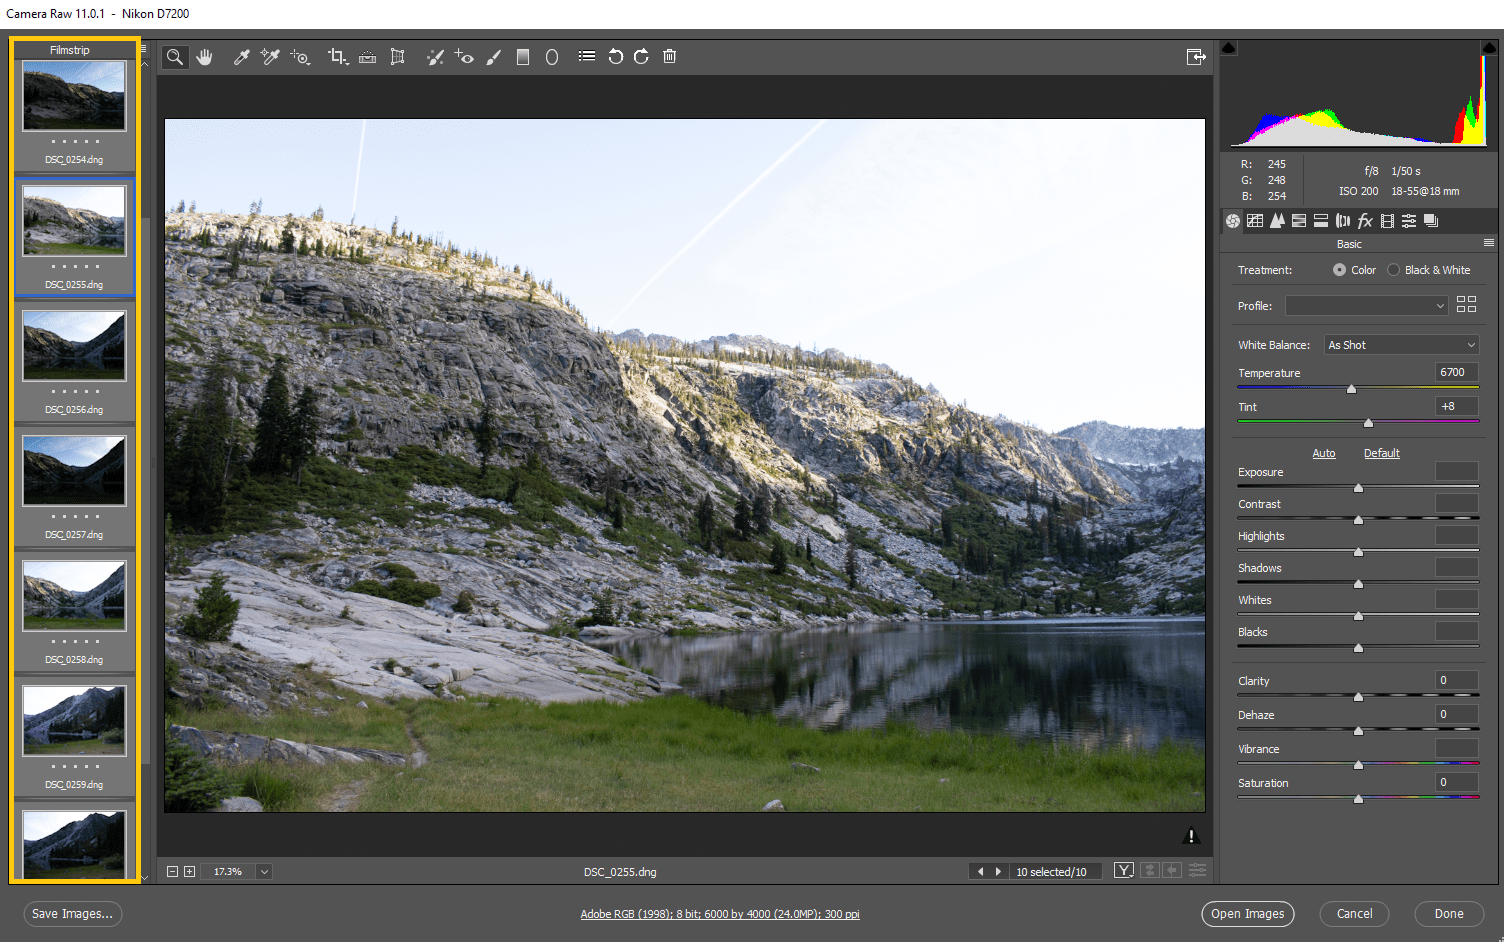 Download Adobe Camera Raw for Windows 10, 8, 7 (2020 Latest)